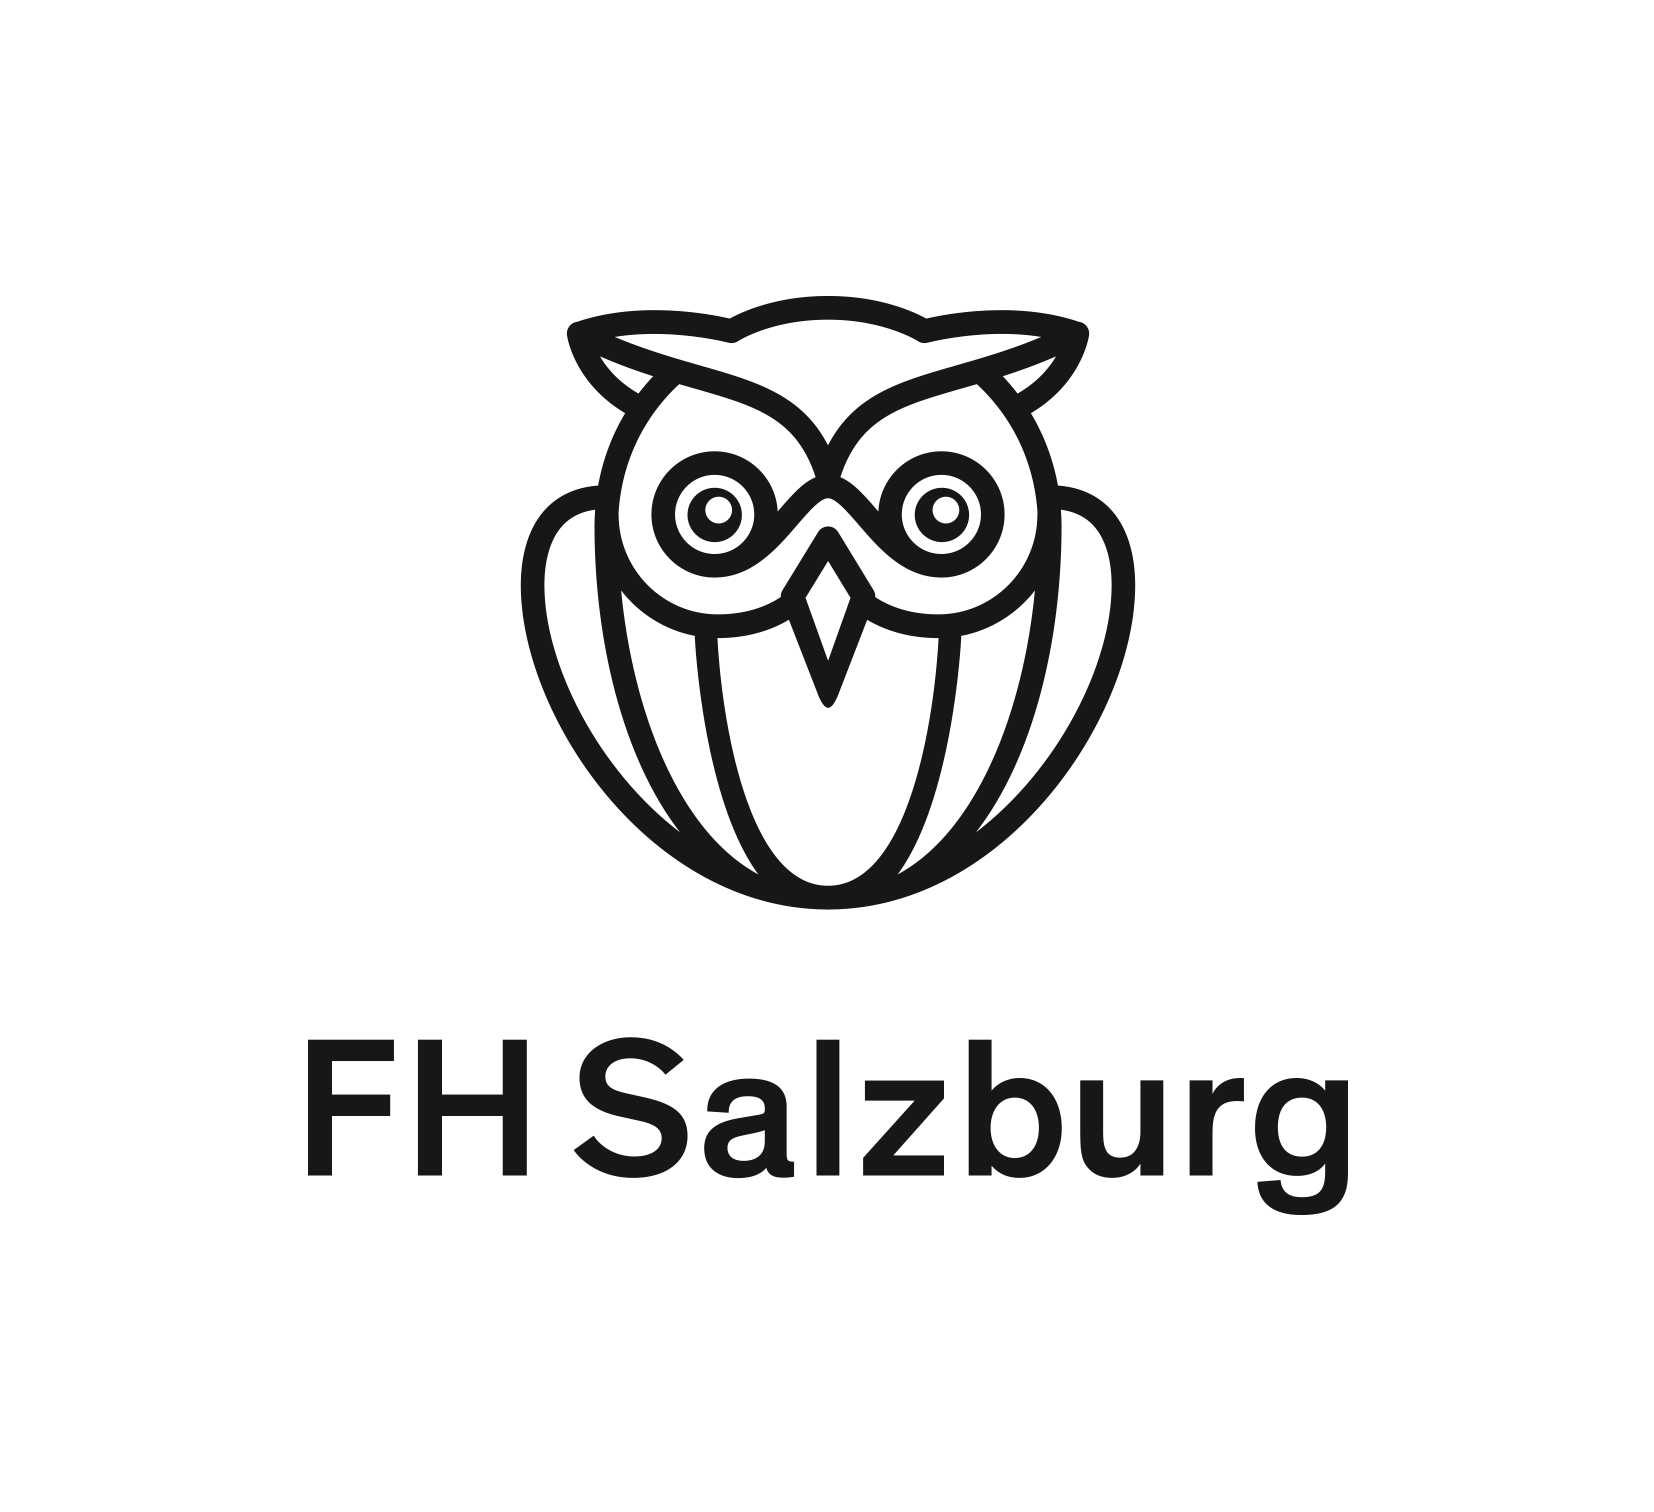 fh salzburg logo de groß